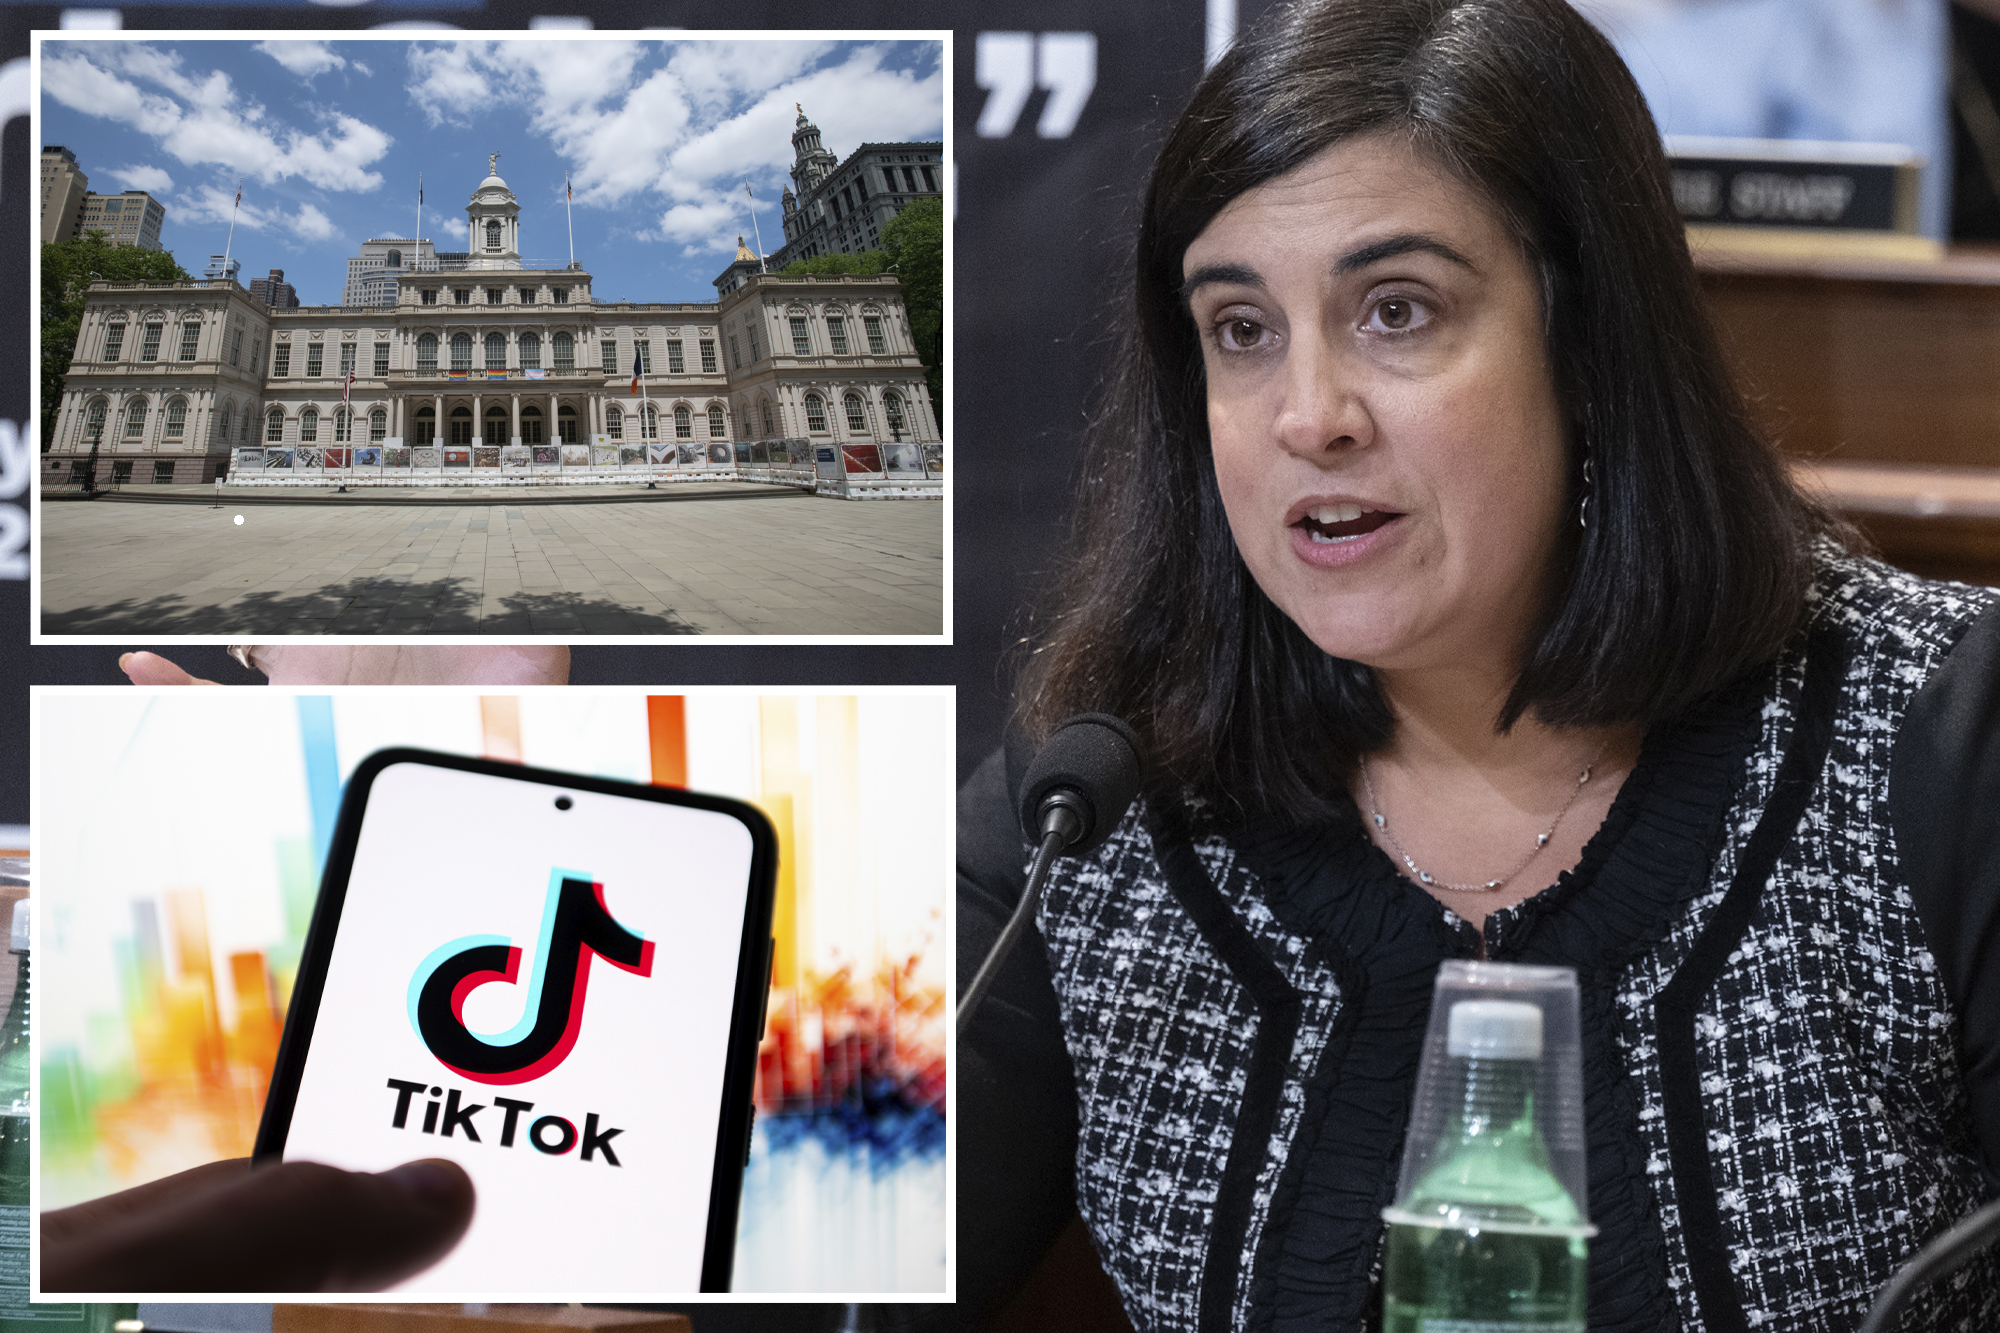 NYC paid nearly $300K for TikTok ads despite FBI’s security warnings